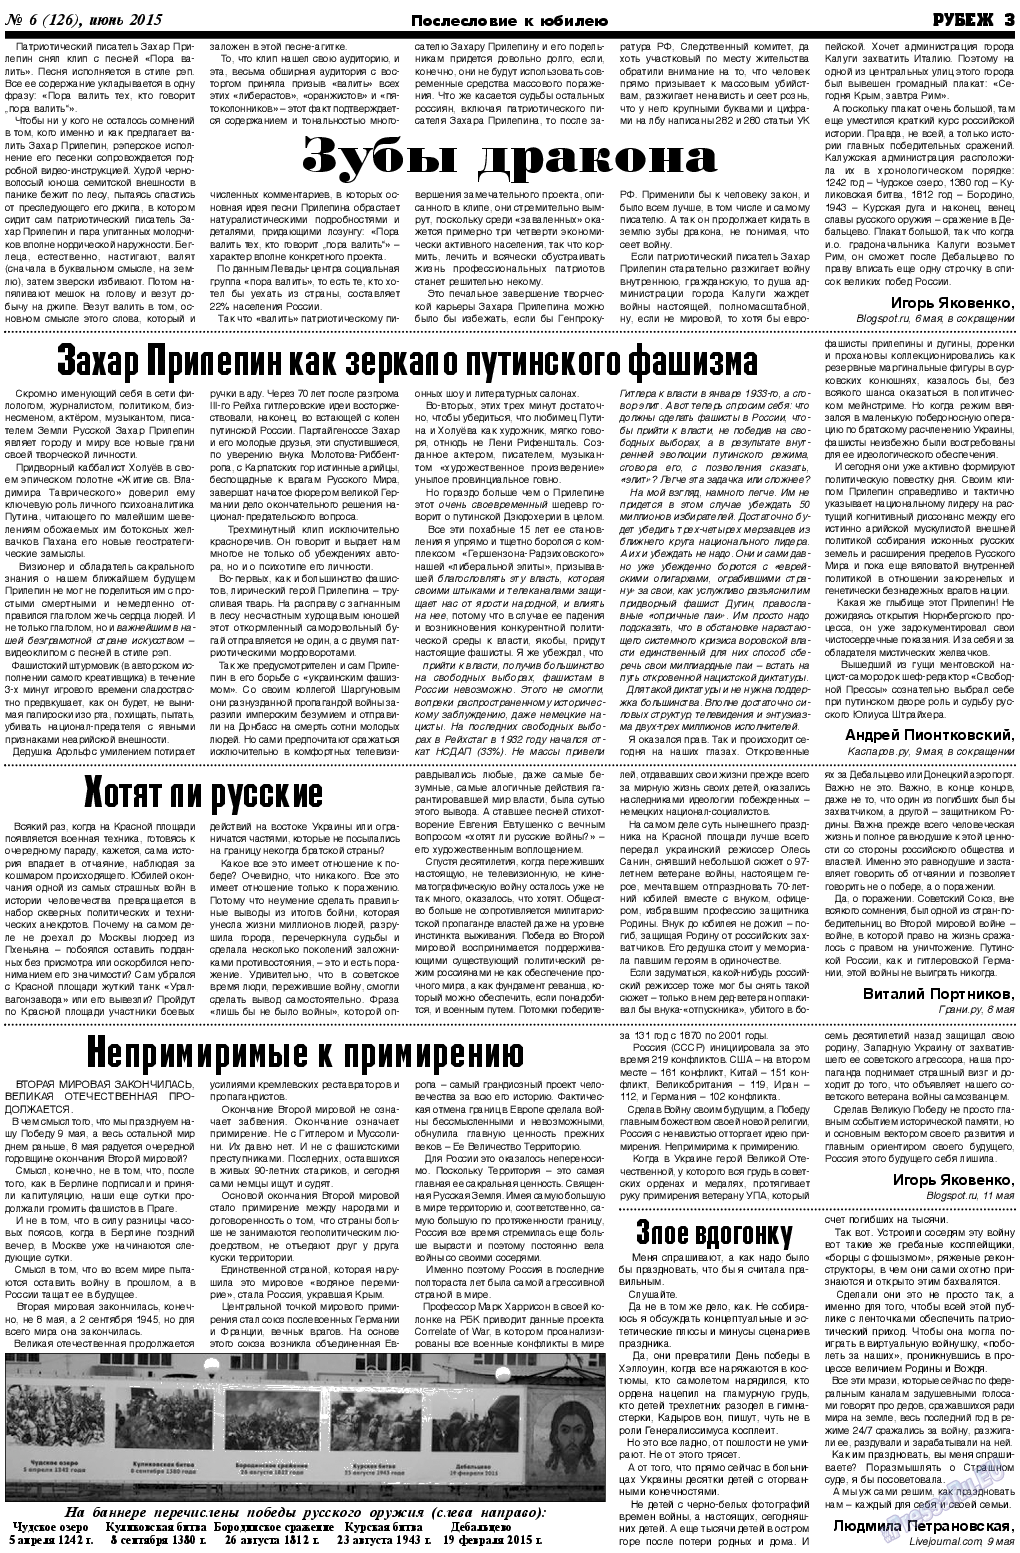 Рубеж, газета. 2015 №6 стр.3